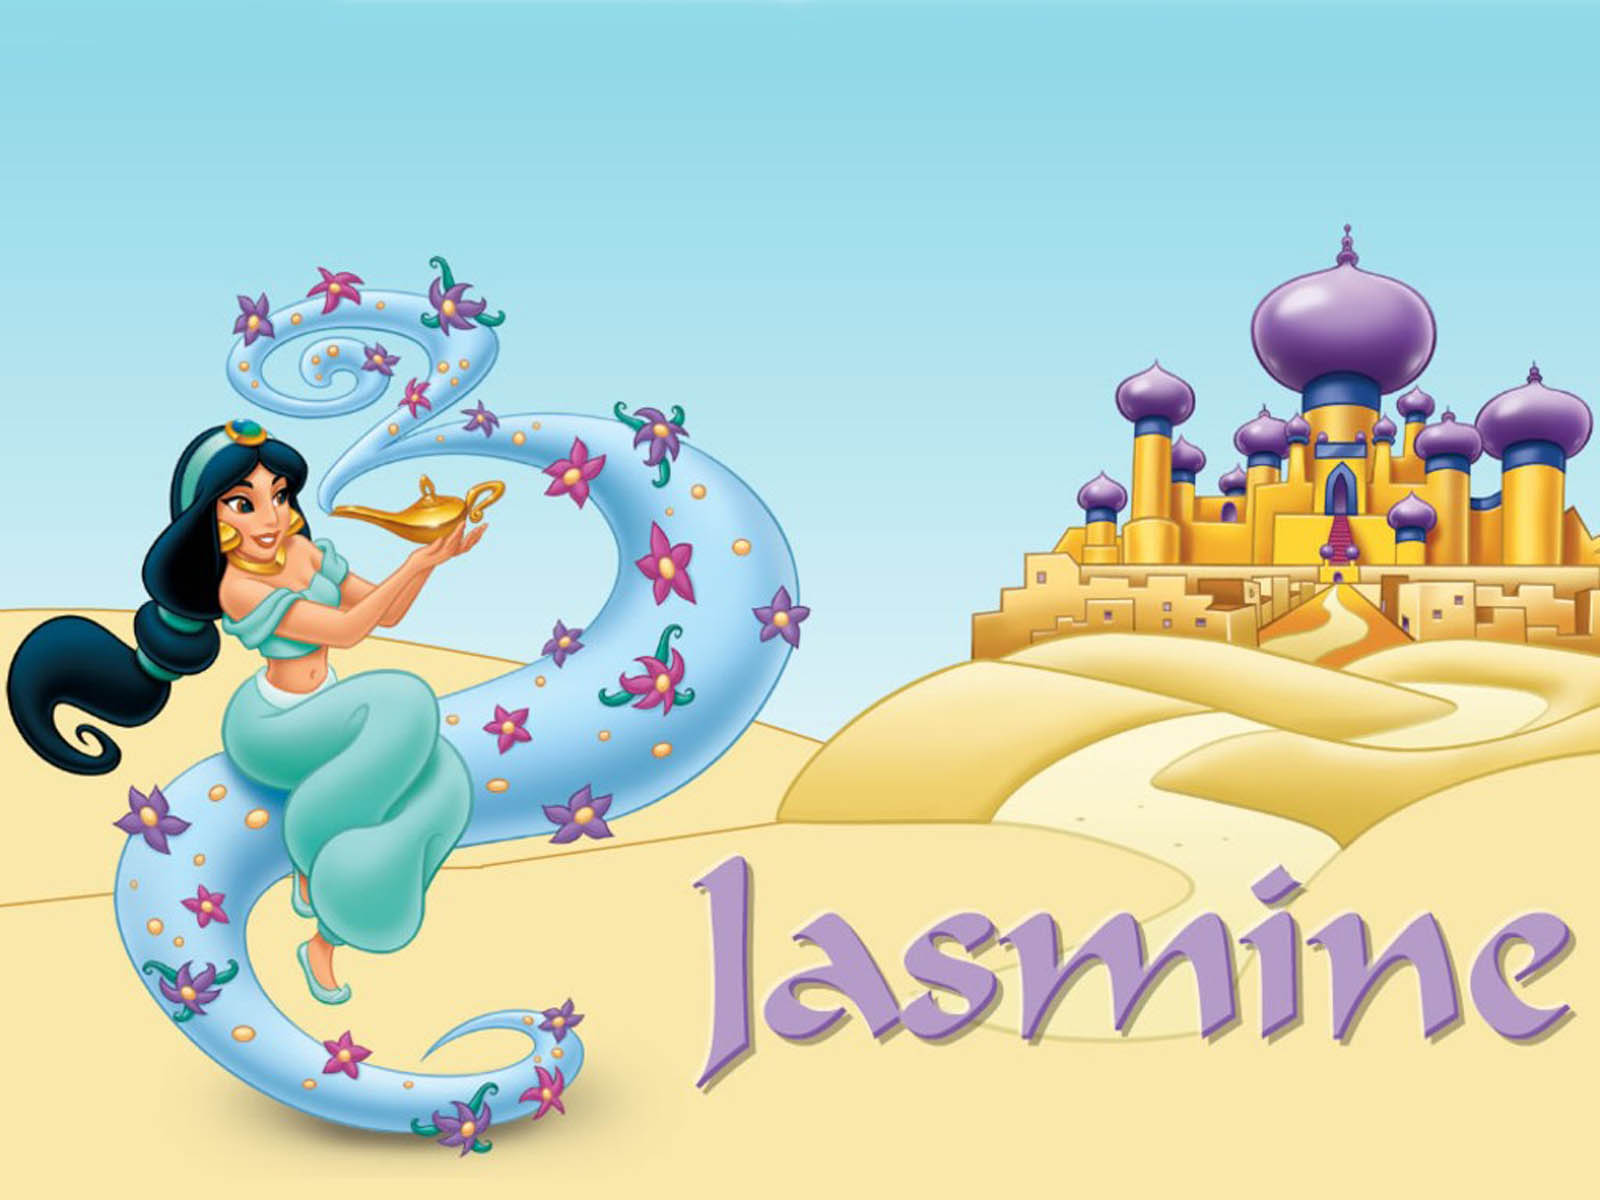 Princess jasmine 1080P 2K 4K 5K HD wallpapers free download  Wallpaper  Flare